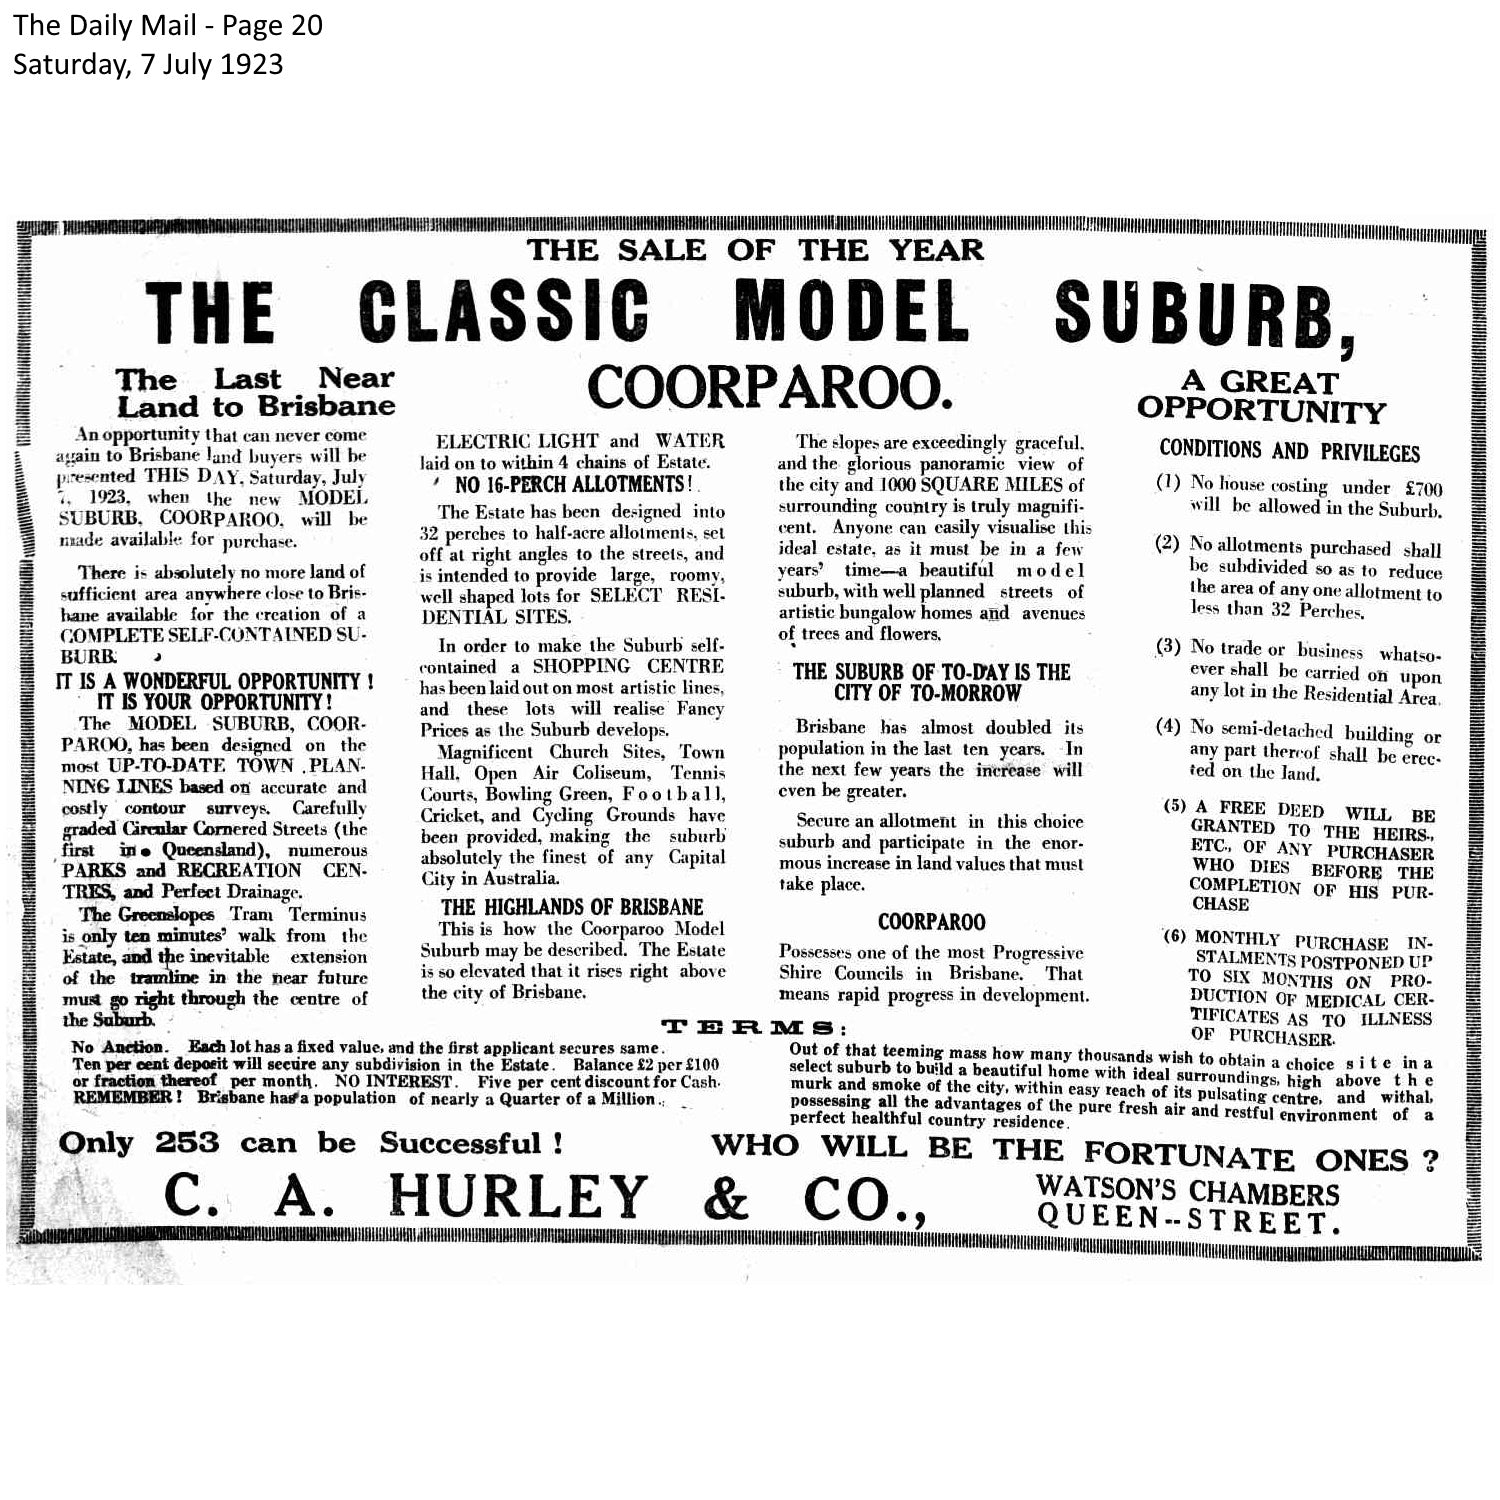 1923 Coorparoo - The Model Suburb